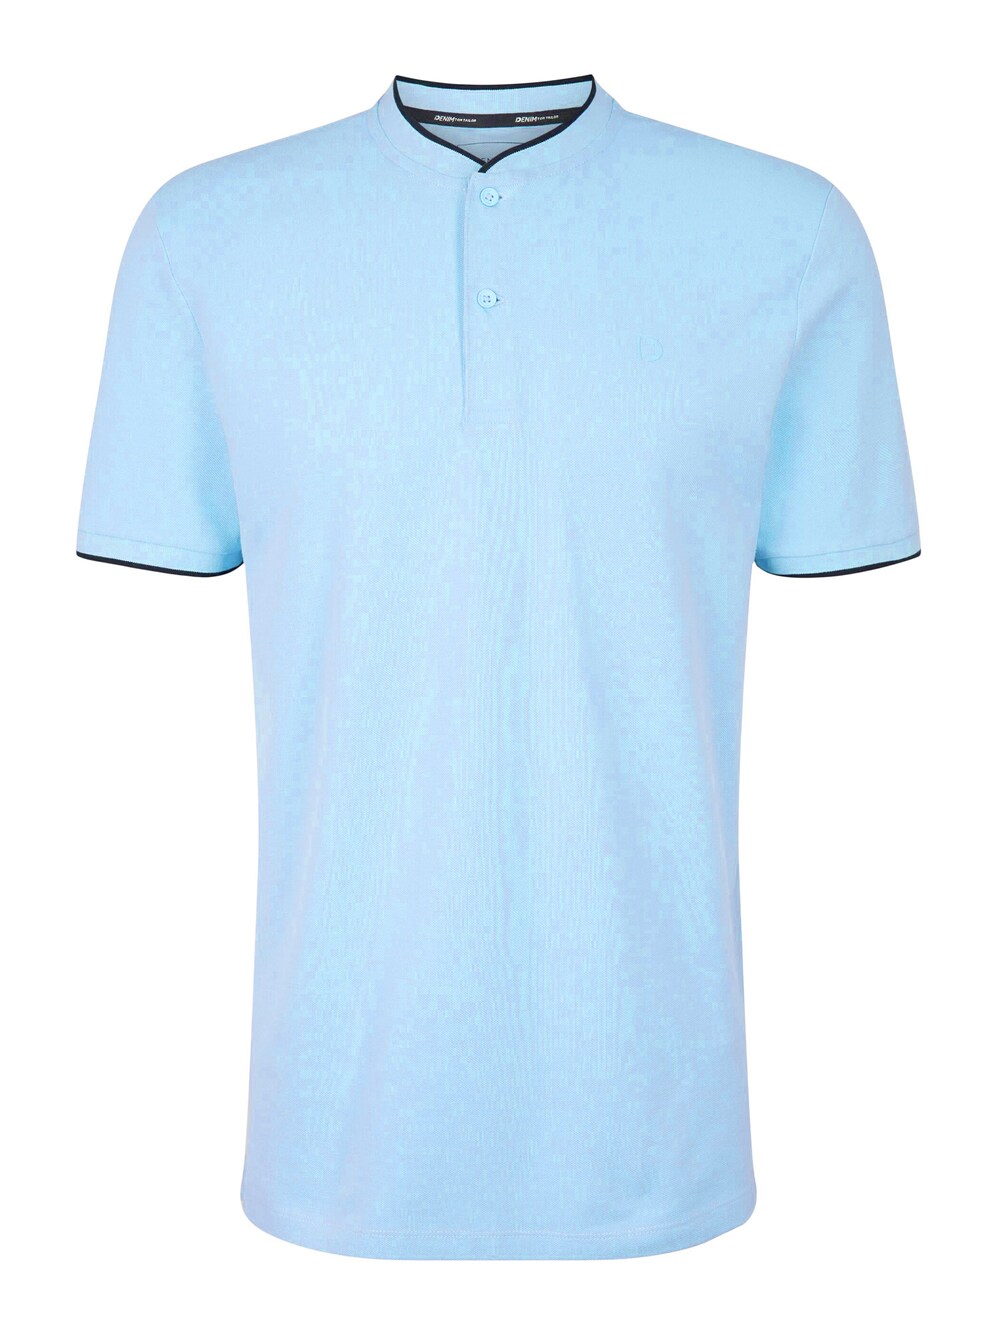 Футболка TOM TAILOR DENIM, темно-синий/светло-голубой рубашка tom tailor размер m голубой